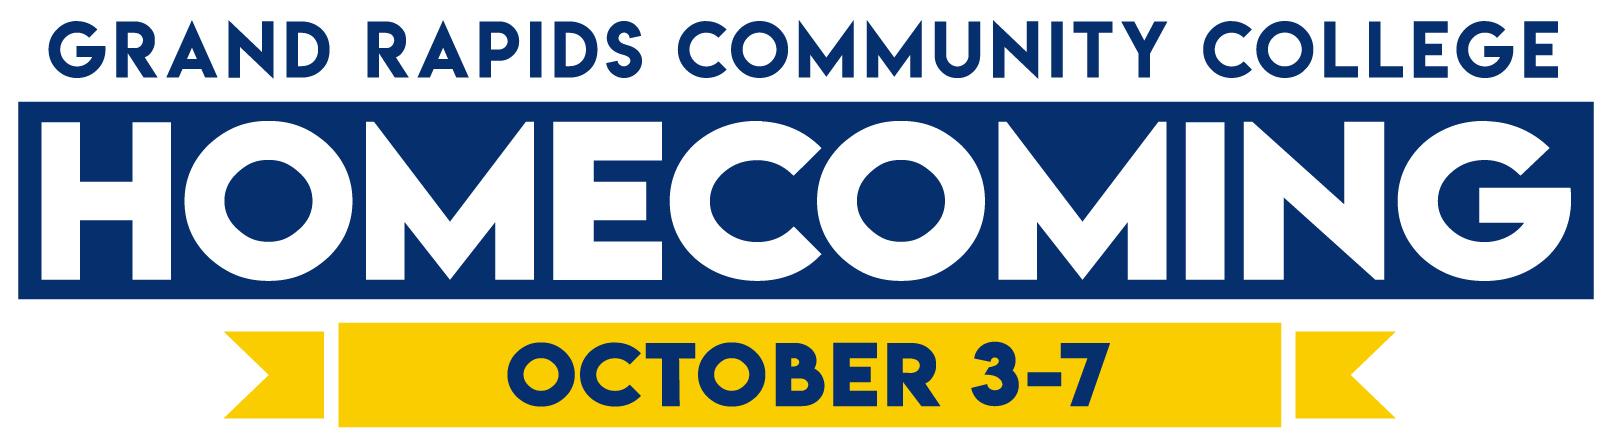 GRCC Homecoming October 3-7 logo